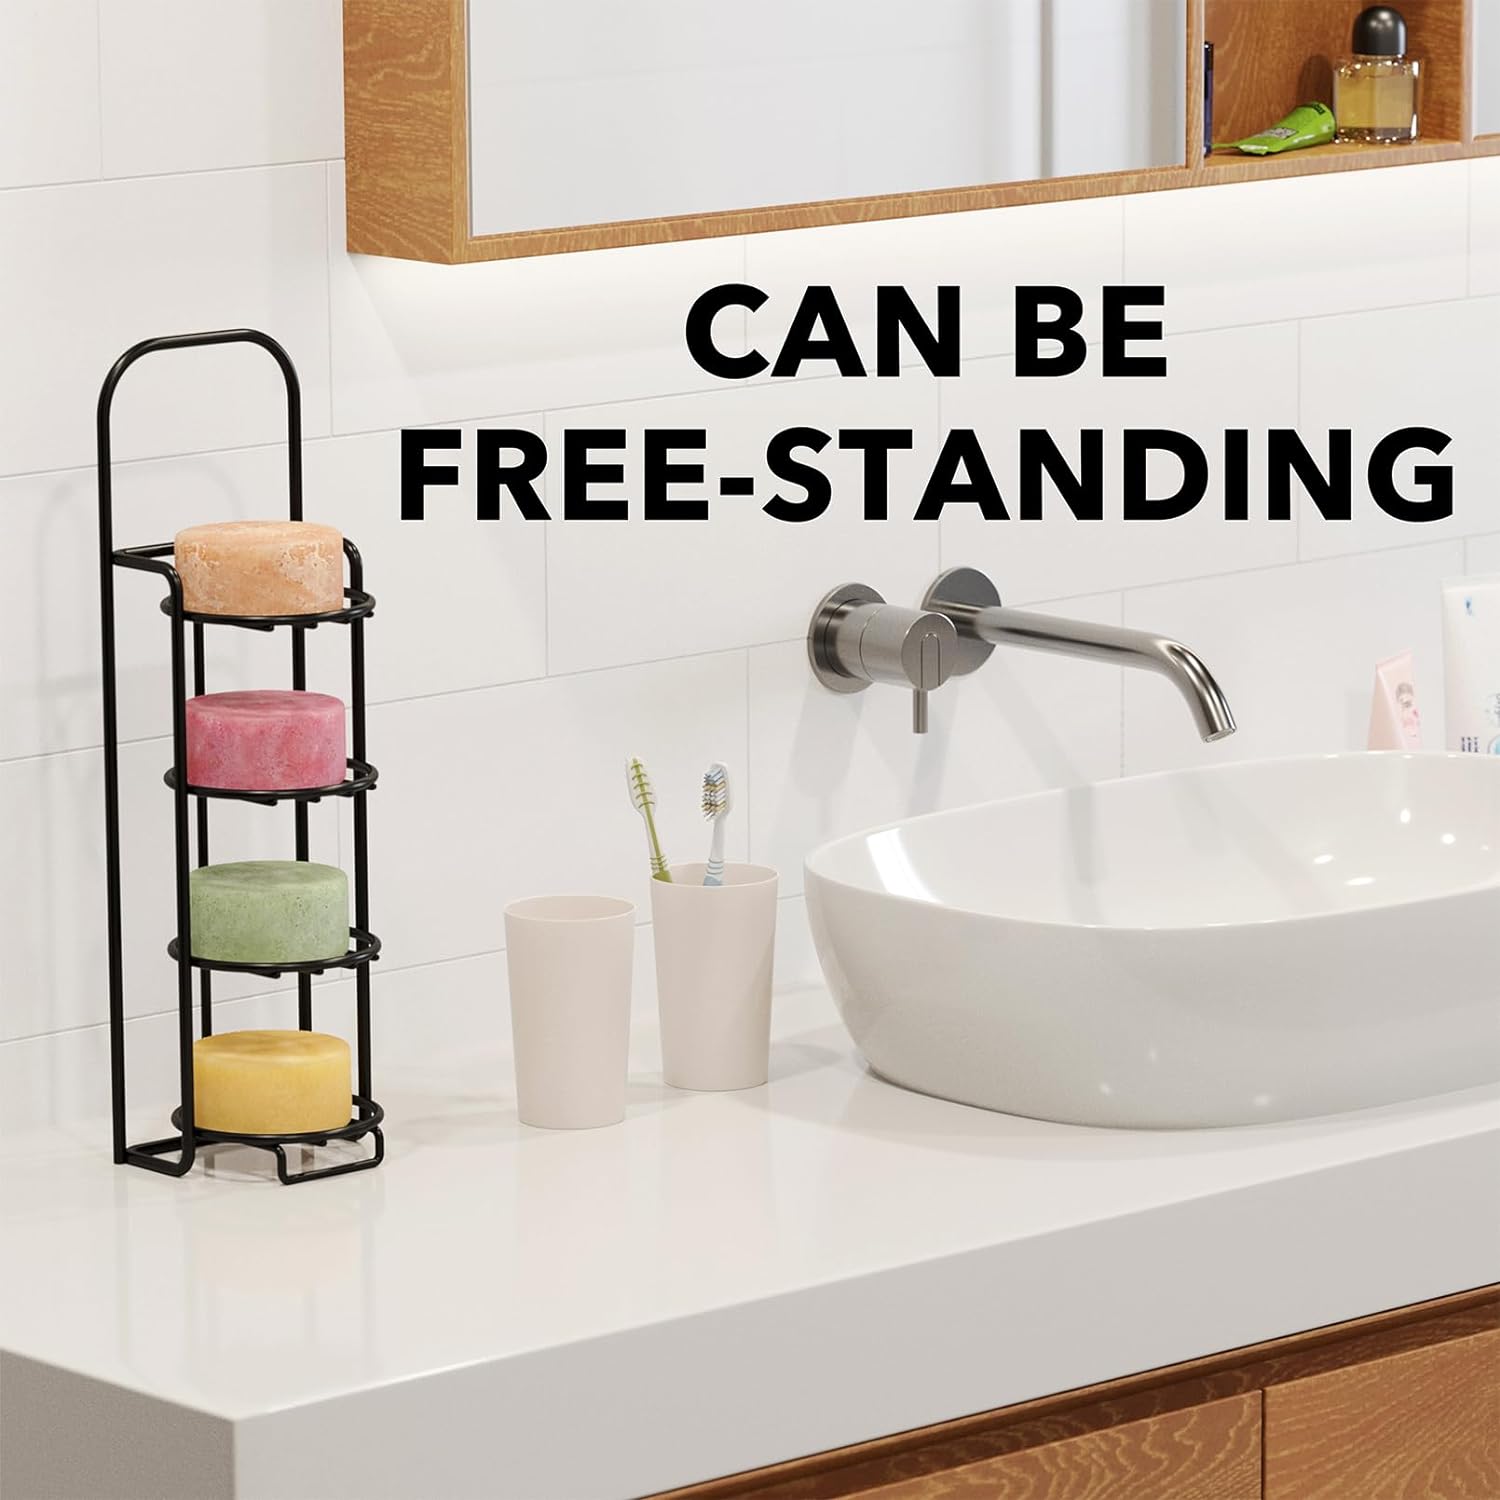 SpaceAid 2 Tier Shampoo Bar Holder for Shower, Self Draining Soap Bar Holders Caddy for Bathroom Wall and Kitchen Sink, Shampoo Bar Dish Rack